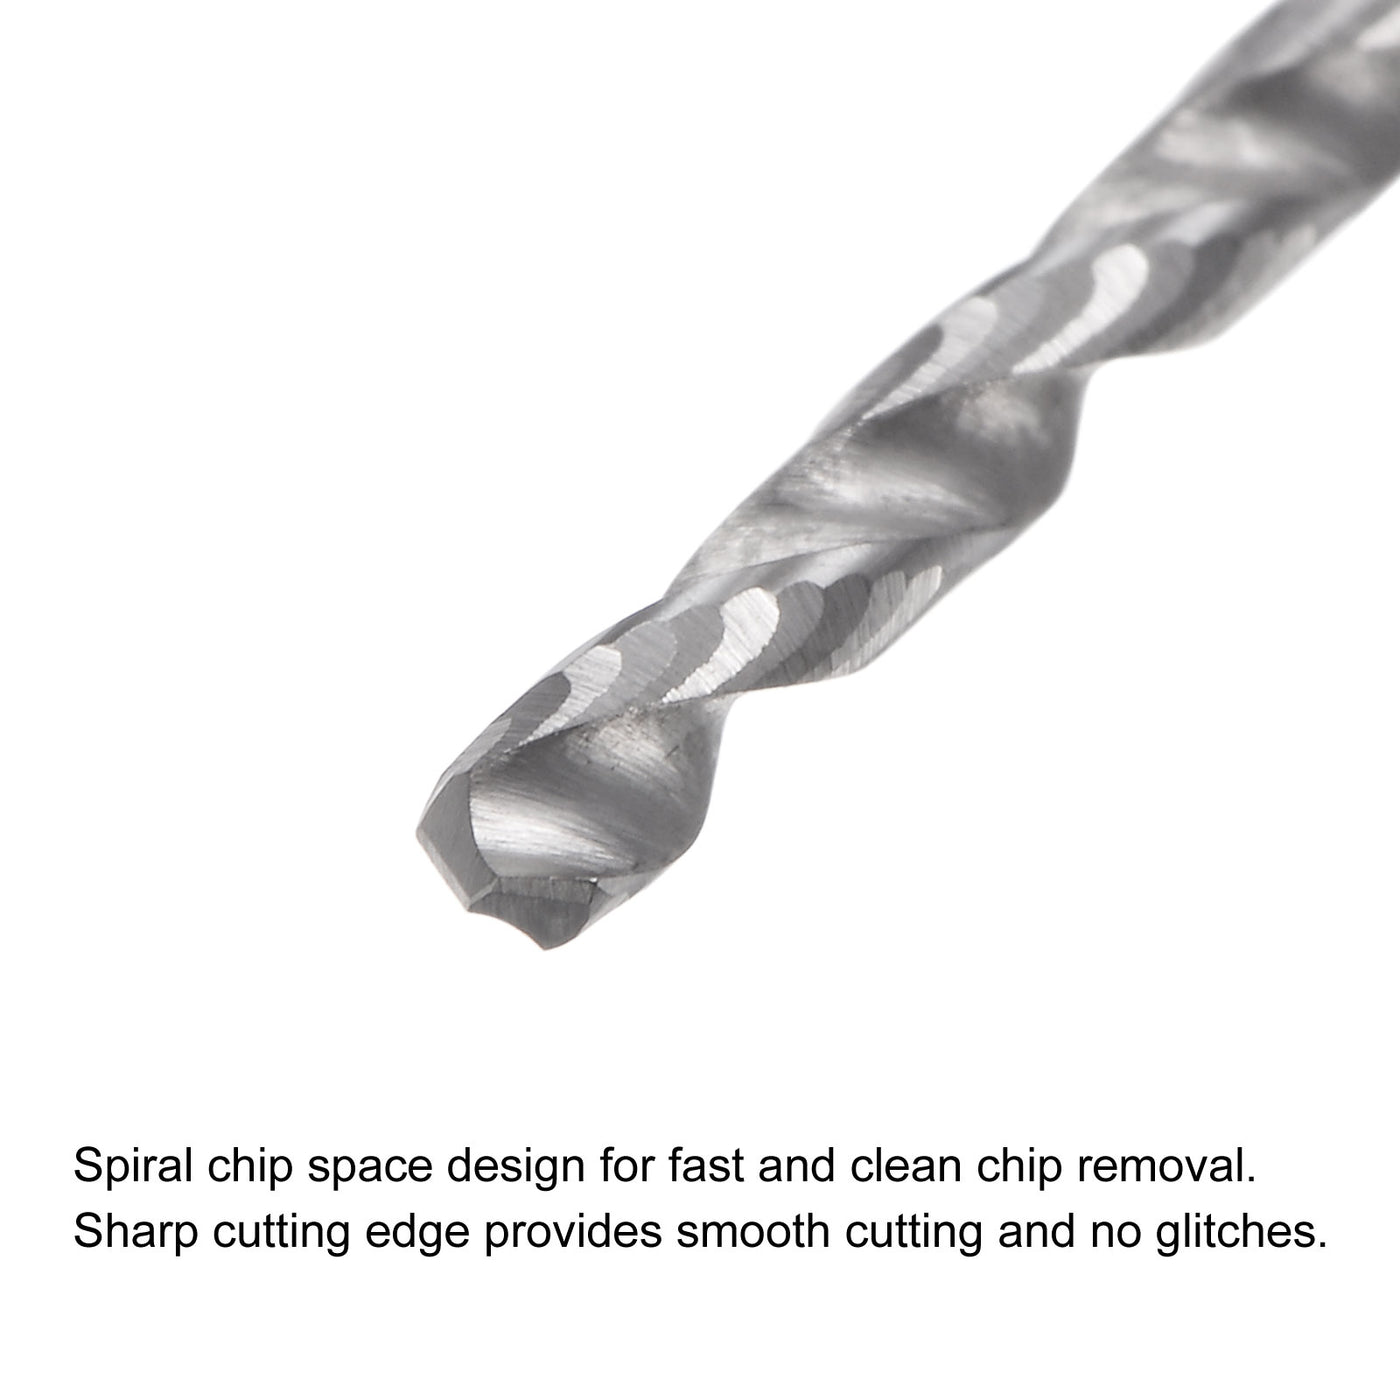 uxcell Uxcell 1.9mm C2/K20 Tungsten Carbide Straight Shank Spiral Flutes Twist Drill Bit 2pcs